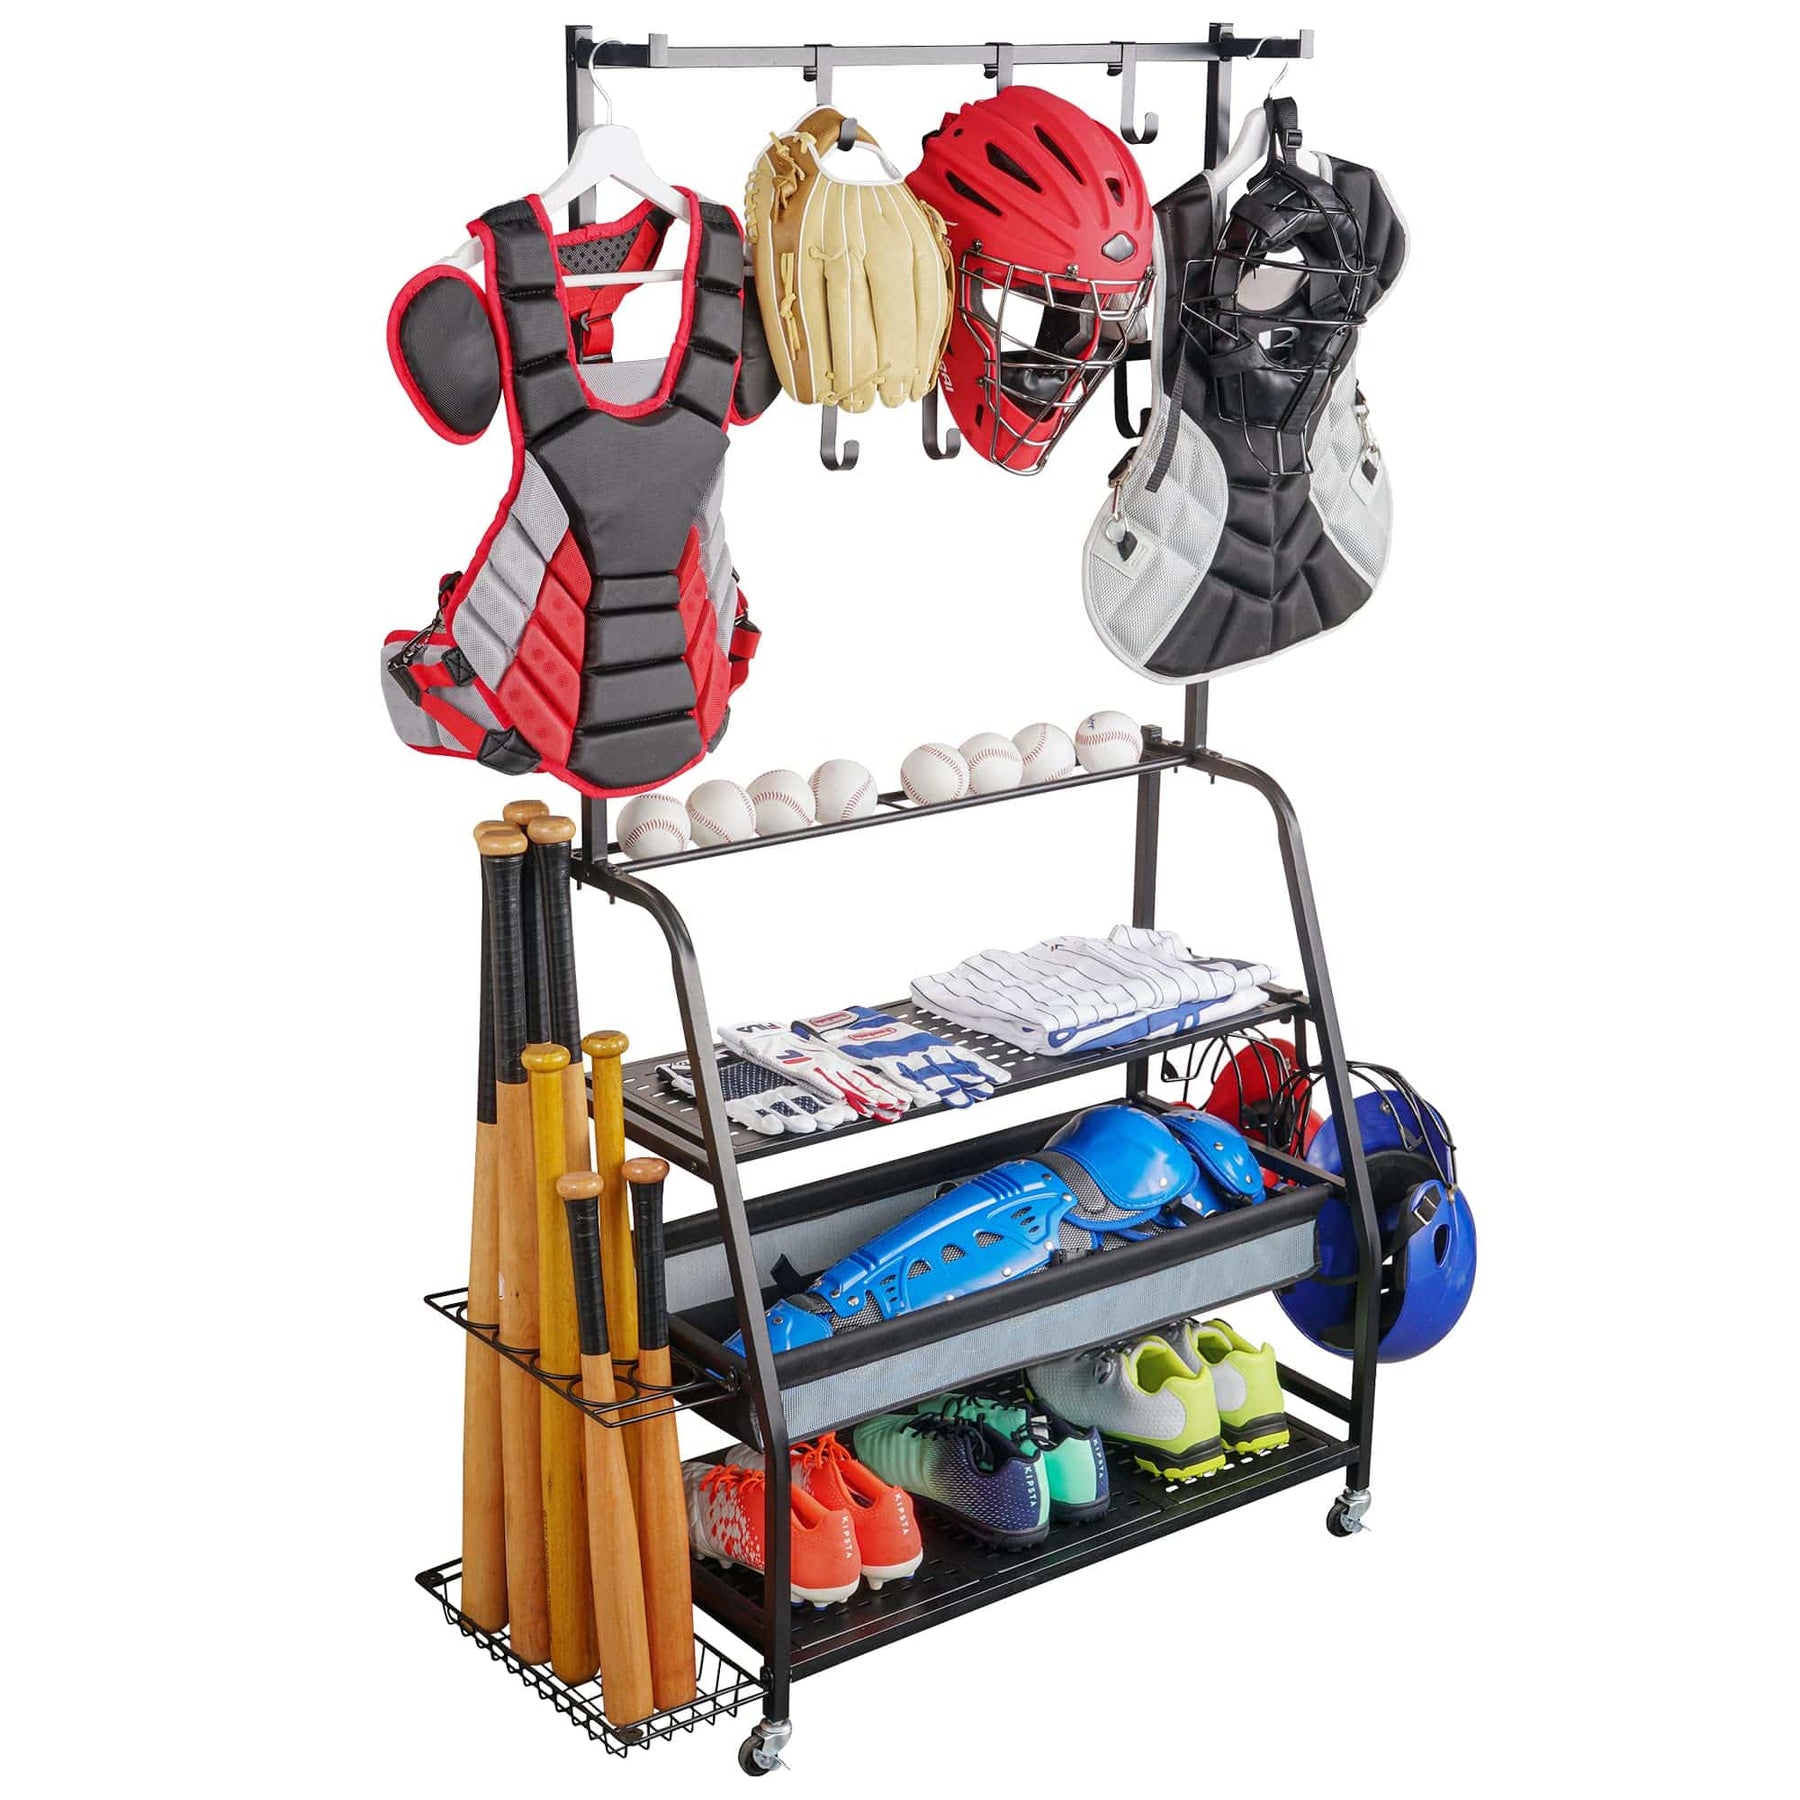 PLKOW Baseball Equipment Storage Shelves, Sport Storage Organizer for Bats, Baseball, Softball Ltmate